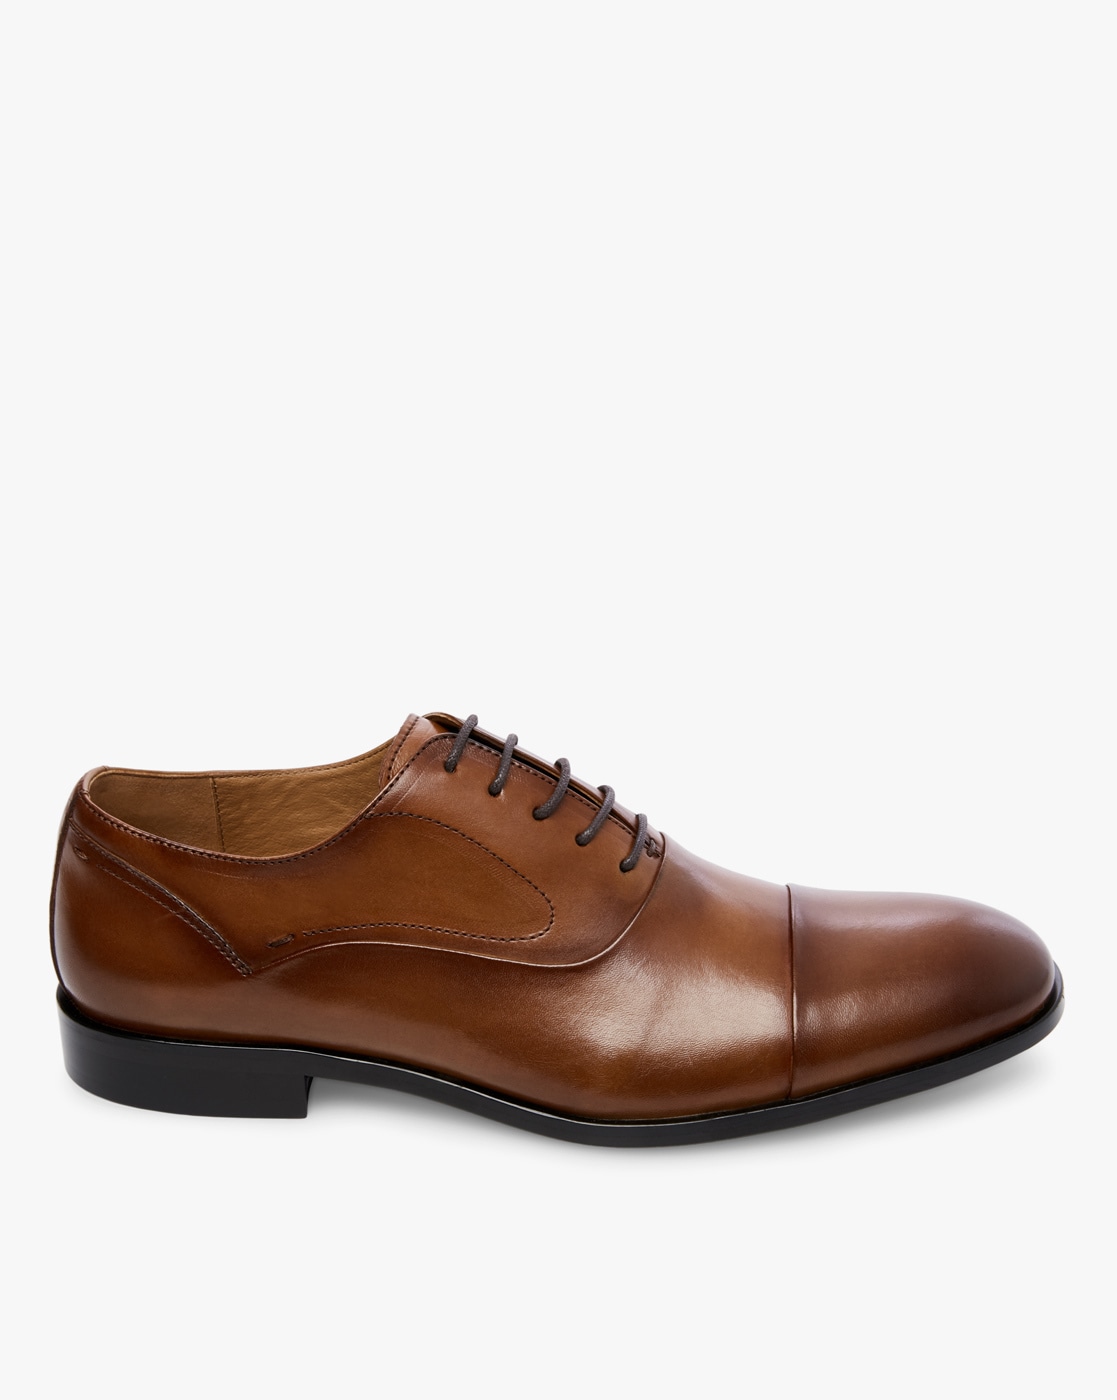 Buy Brown Formal Shoes for Men by STEVE 